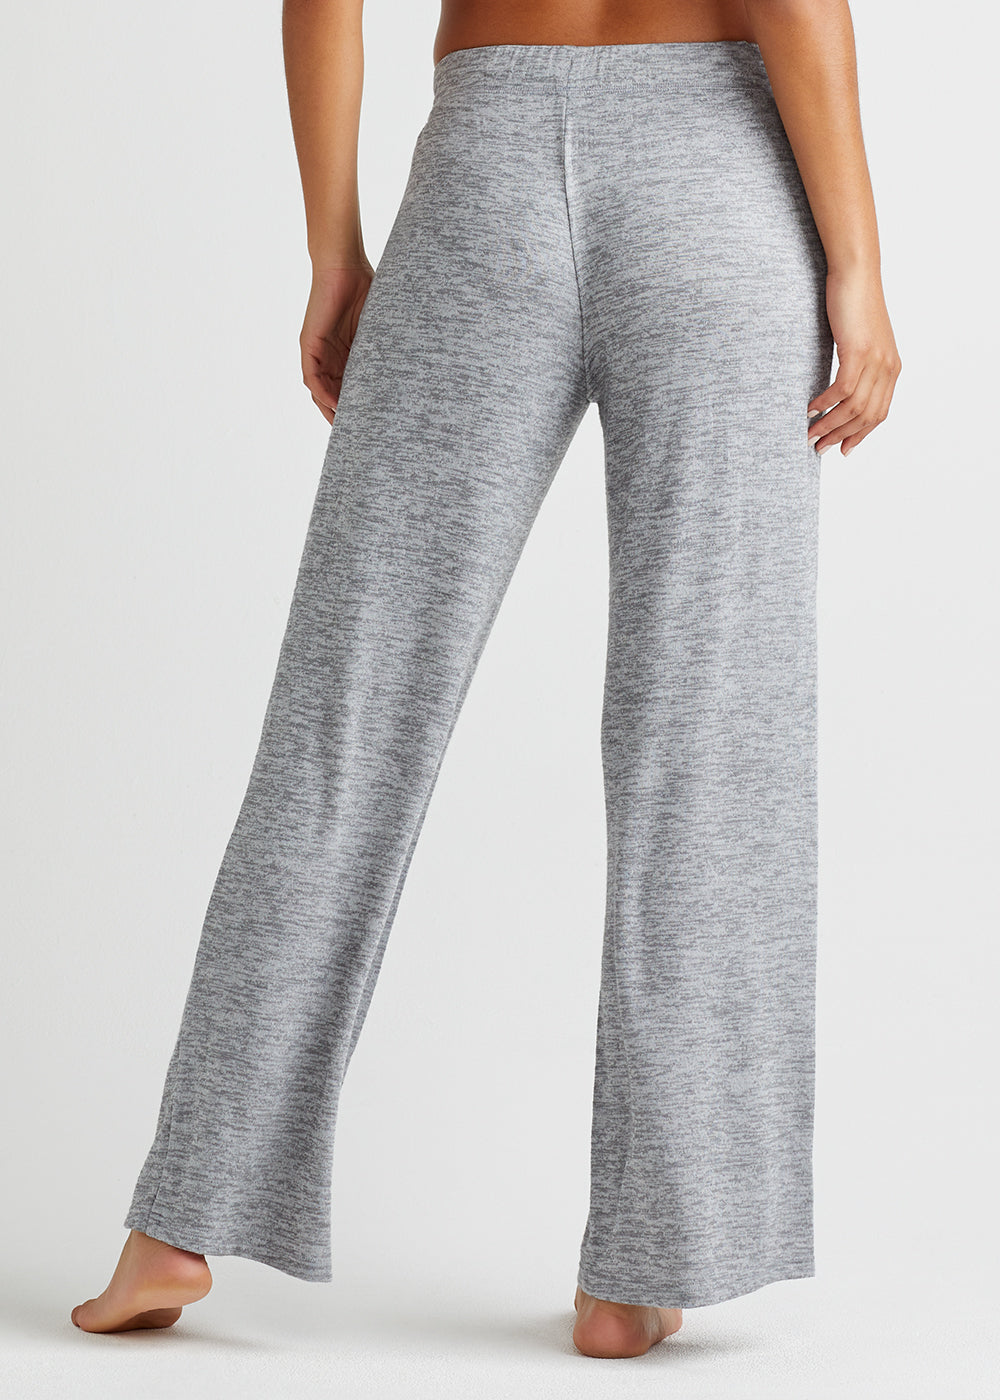 Women's Perfectly Cozy Wide Leg Lounge Pants - Stars Above™ Light Gray XXL